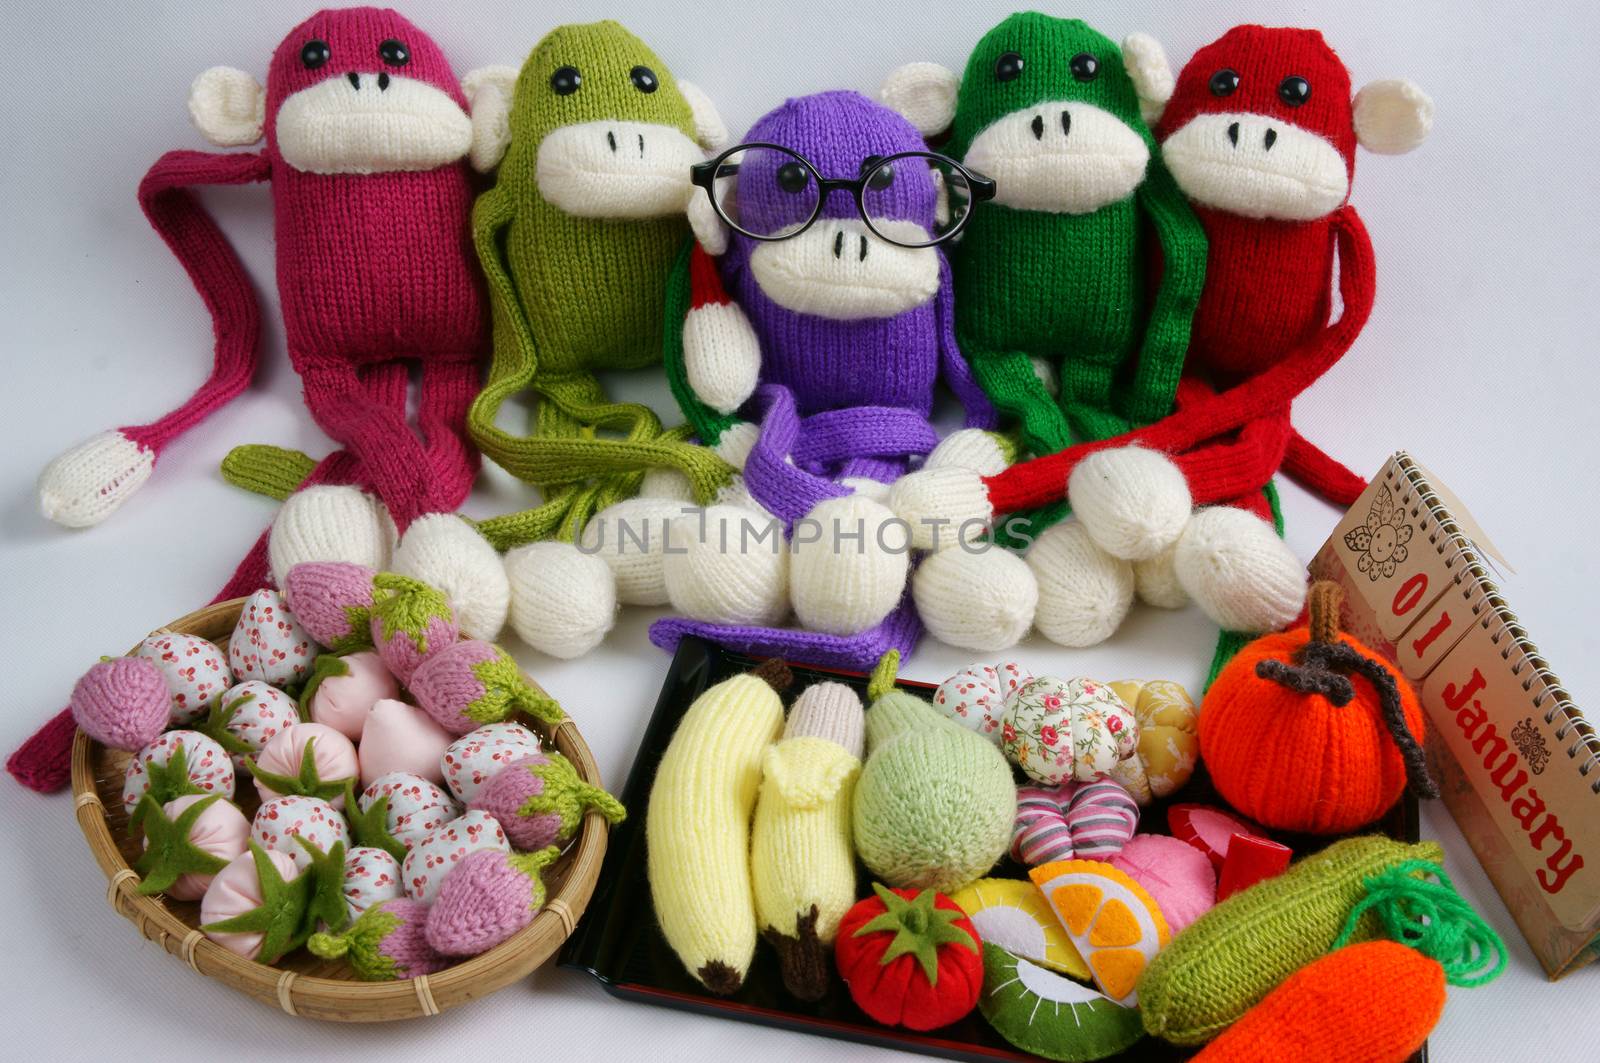 Family, stuffed animal, new year, monkey, funny by xuanhuongho